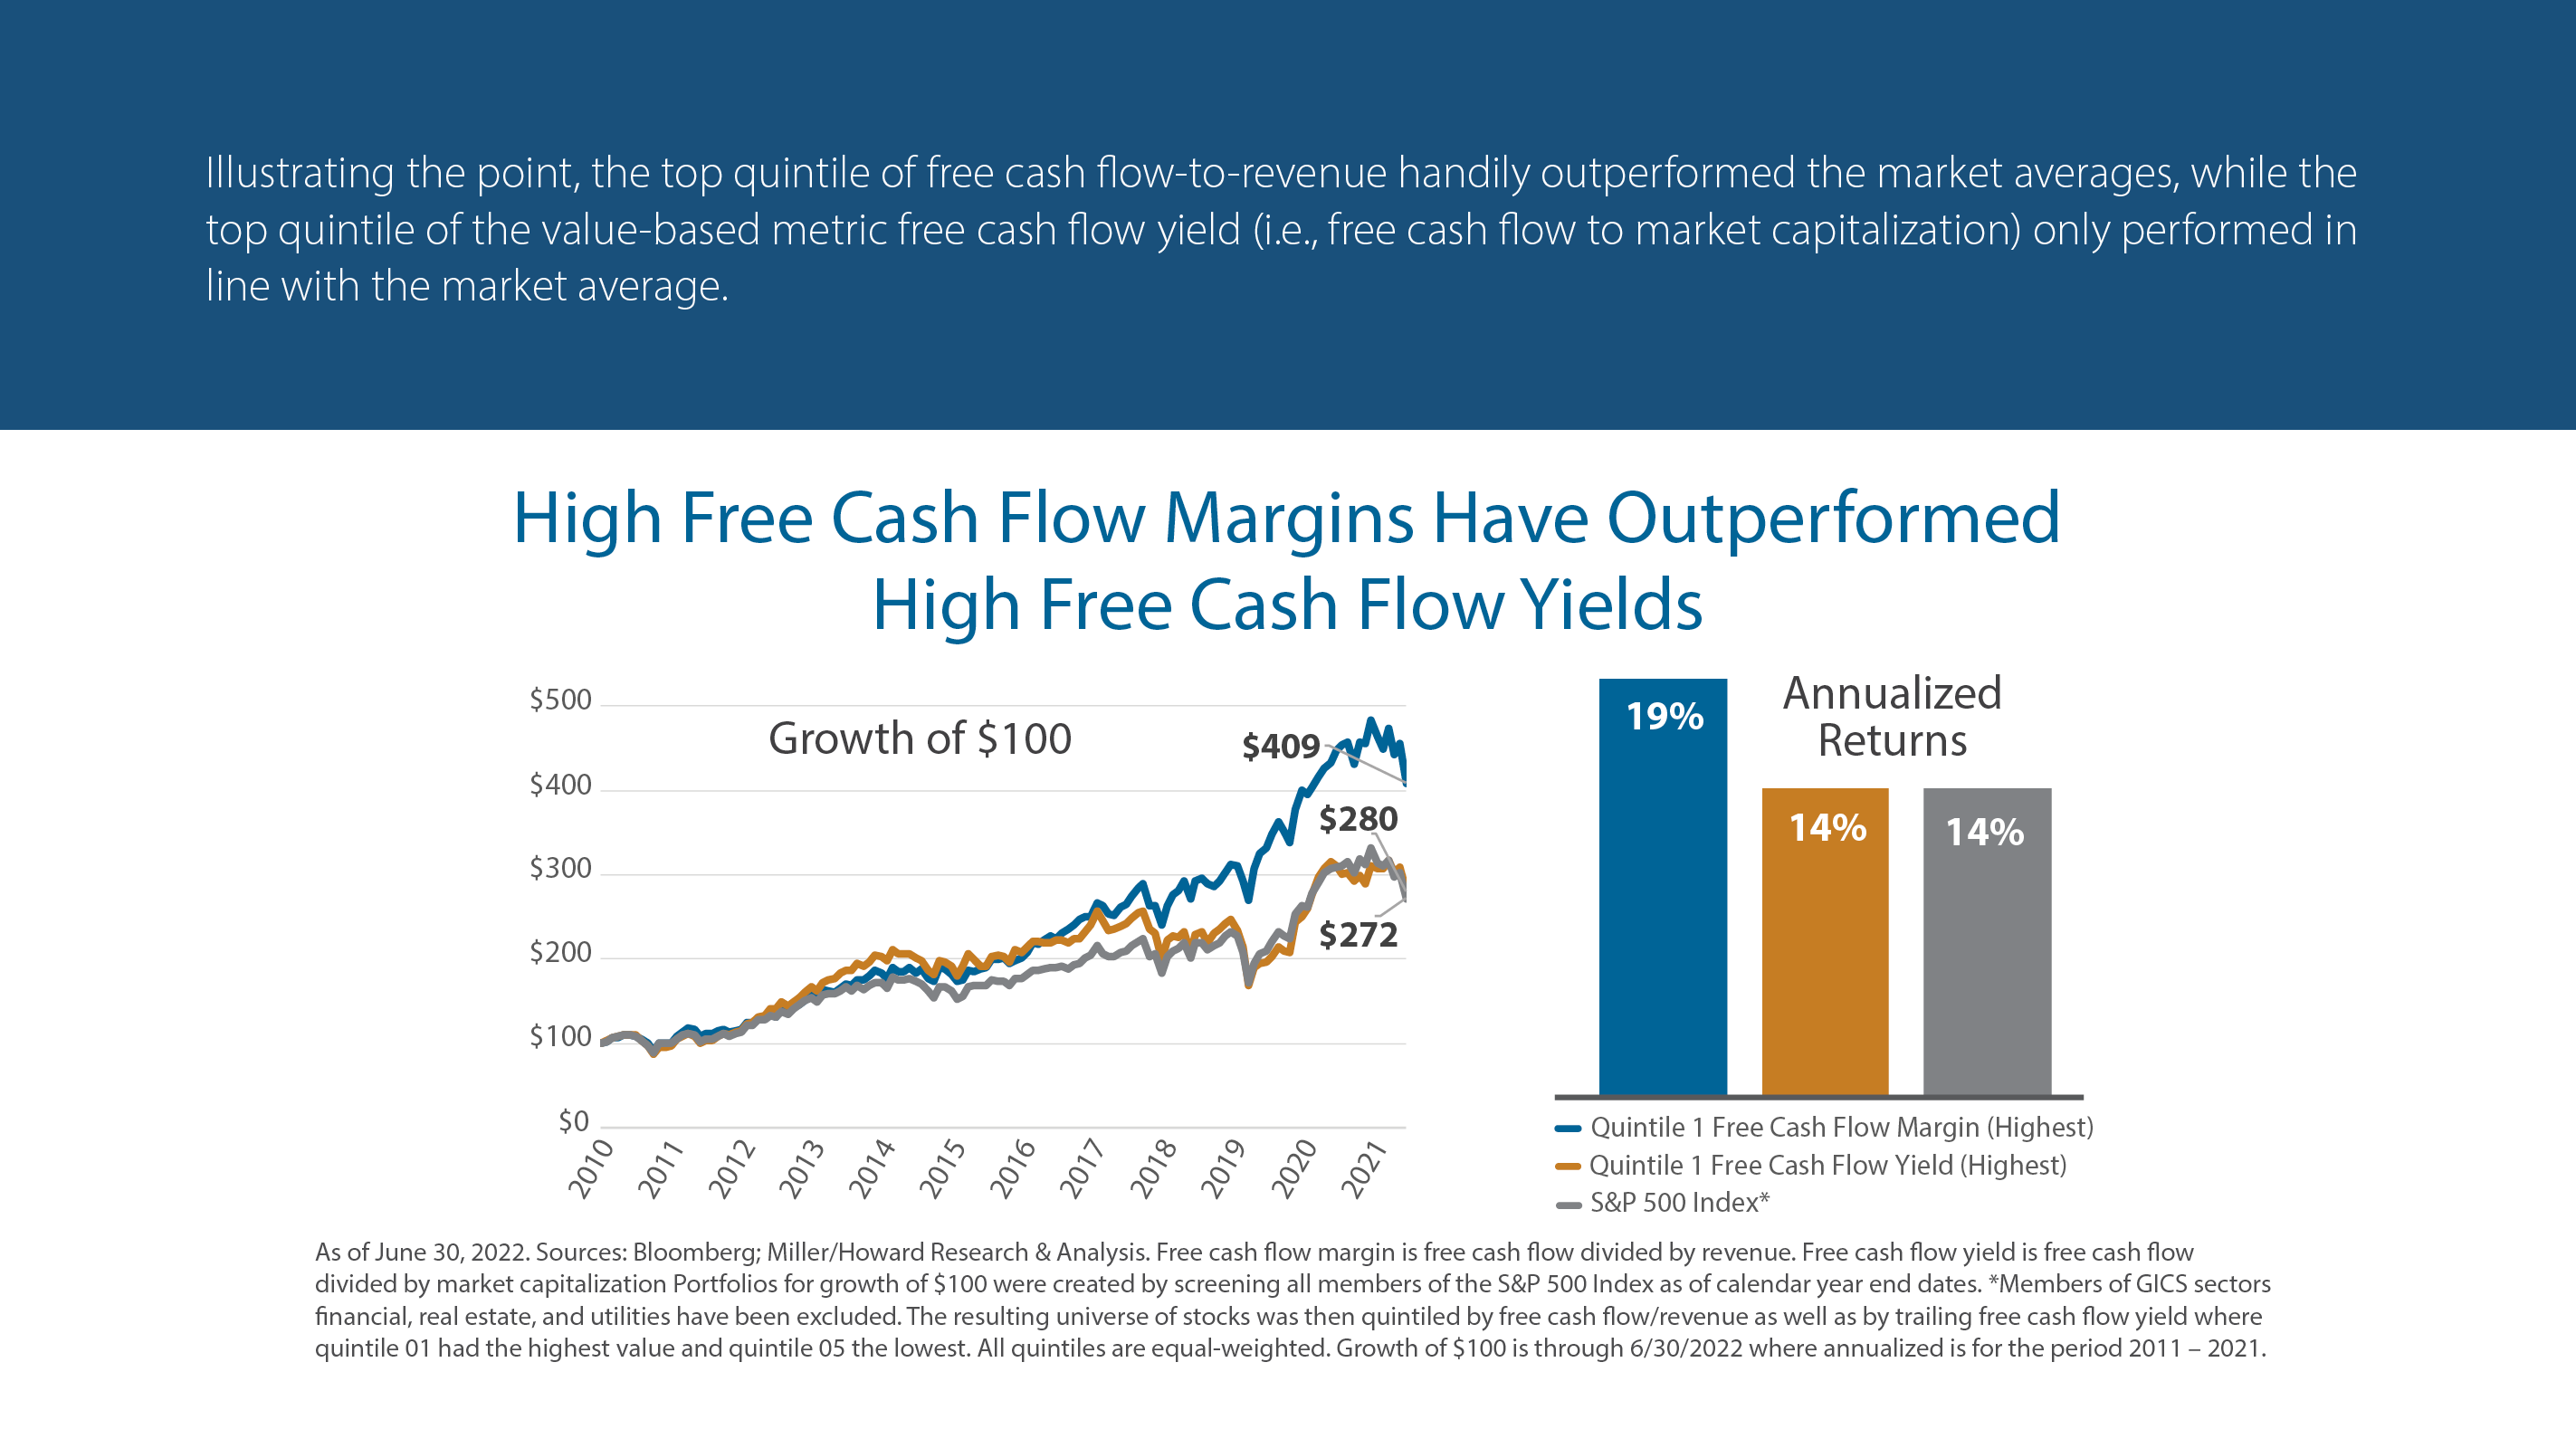 High Free Cash Flow Margins Have Outperformed High Free Cash Flow Yields